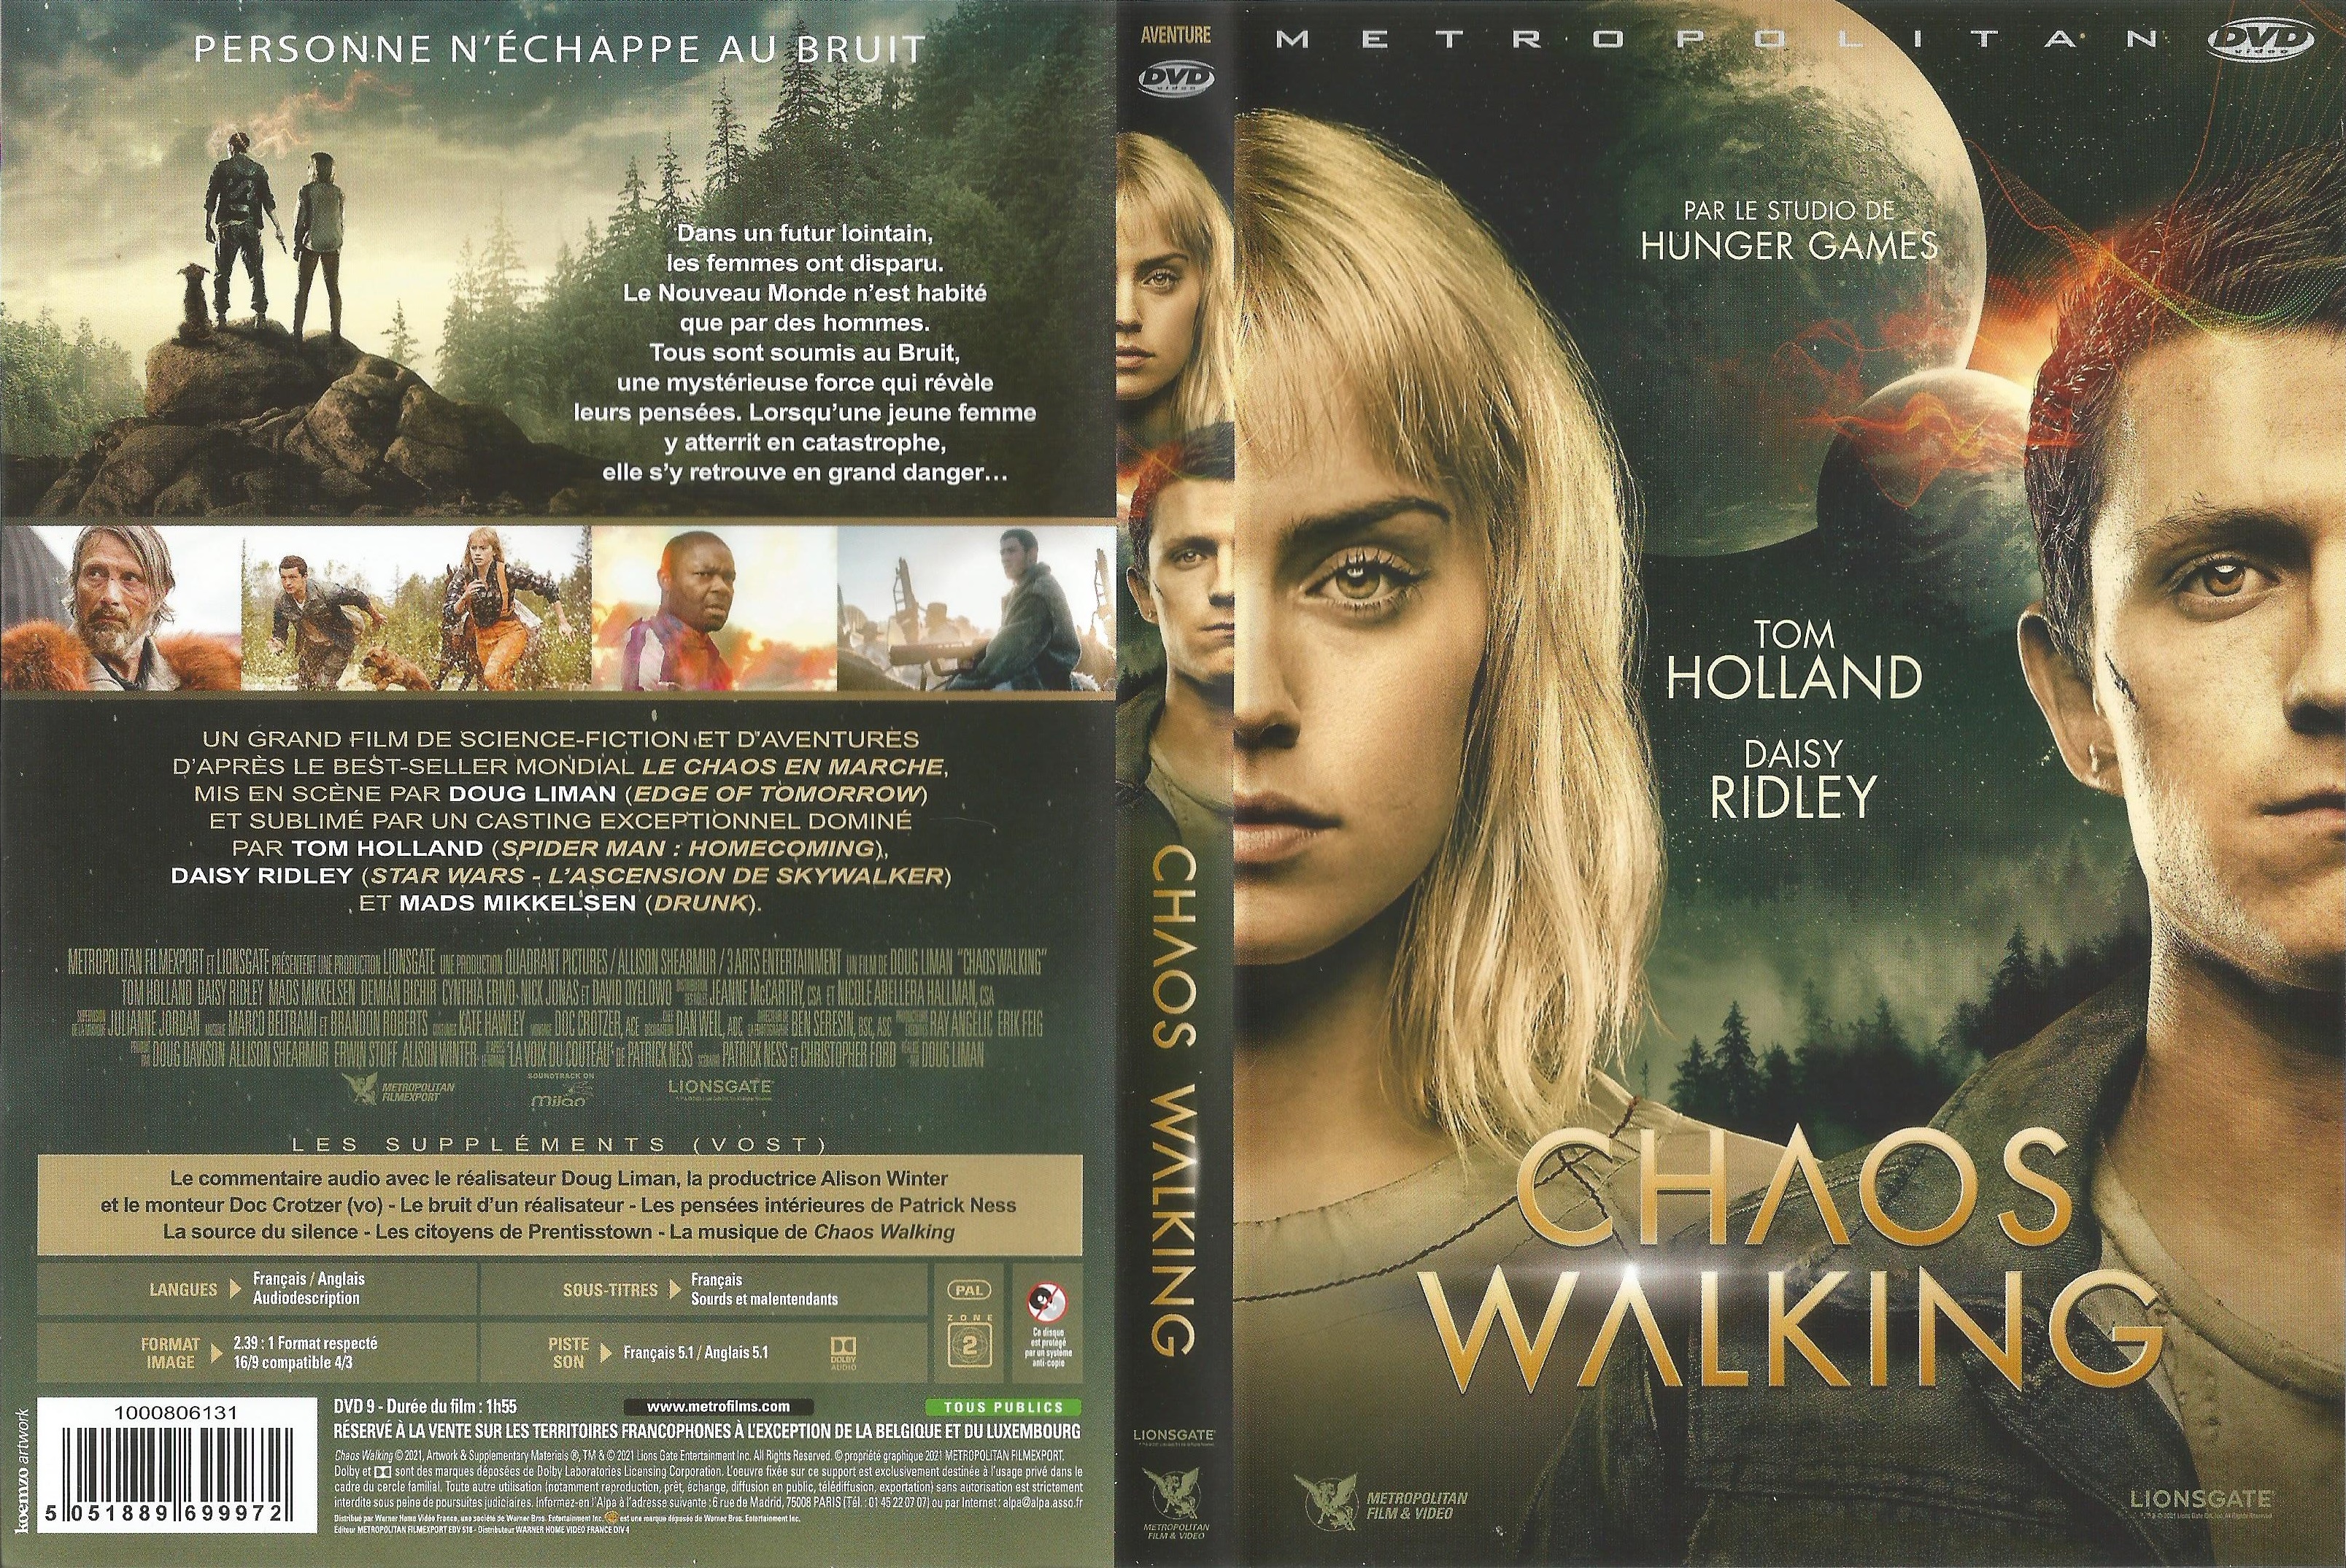 Jaquette DVD Chaos Walking